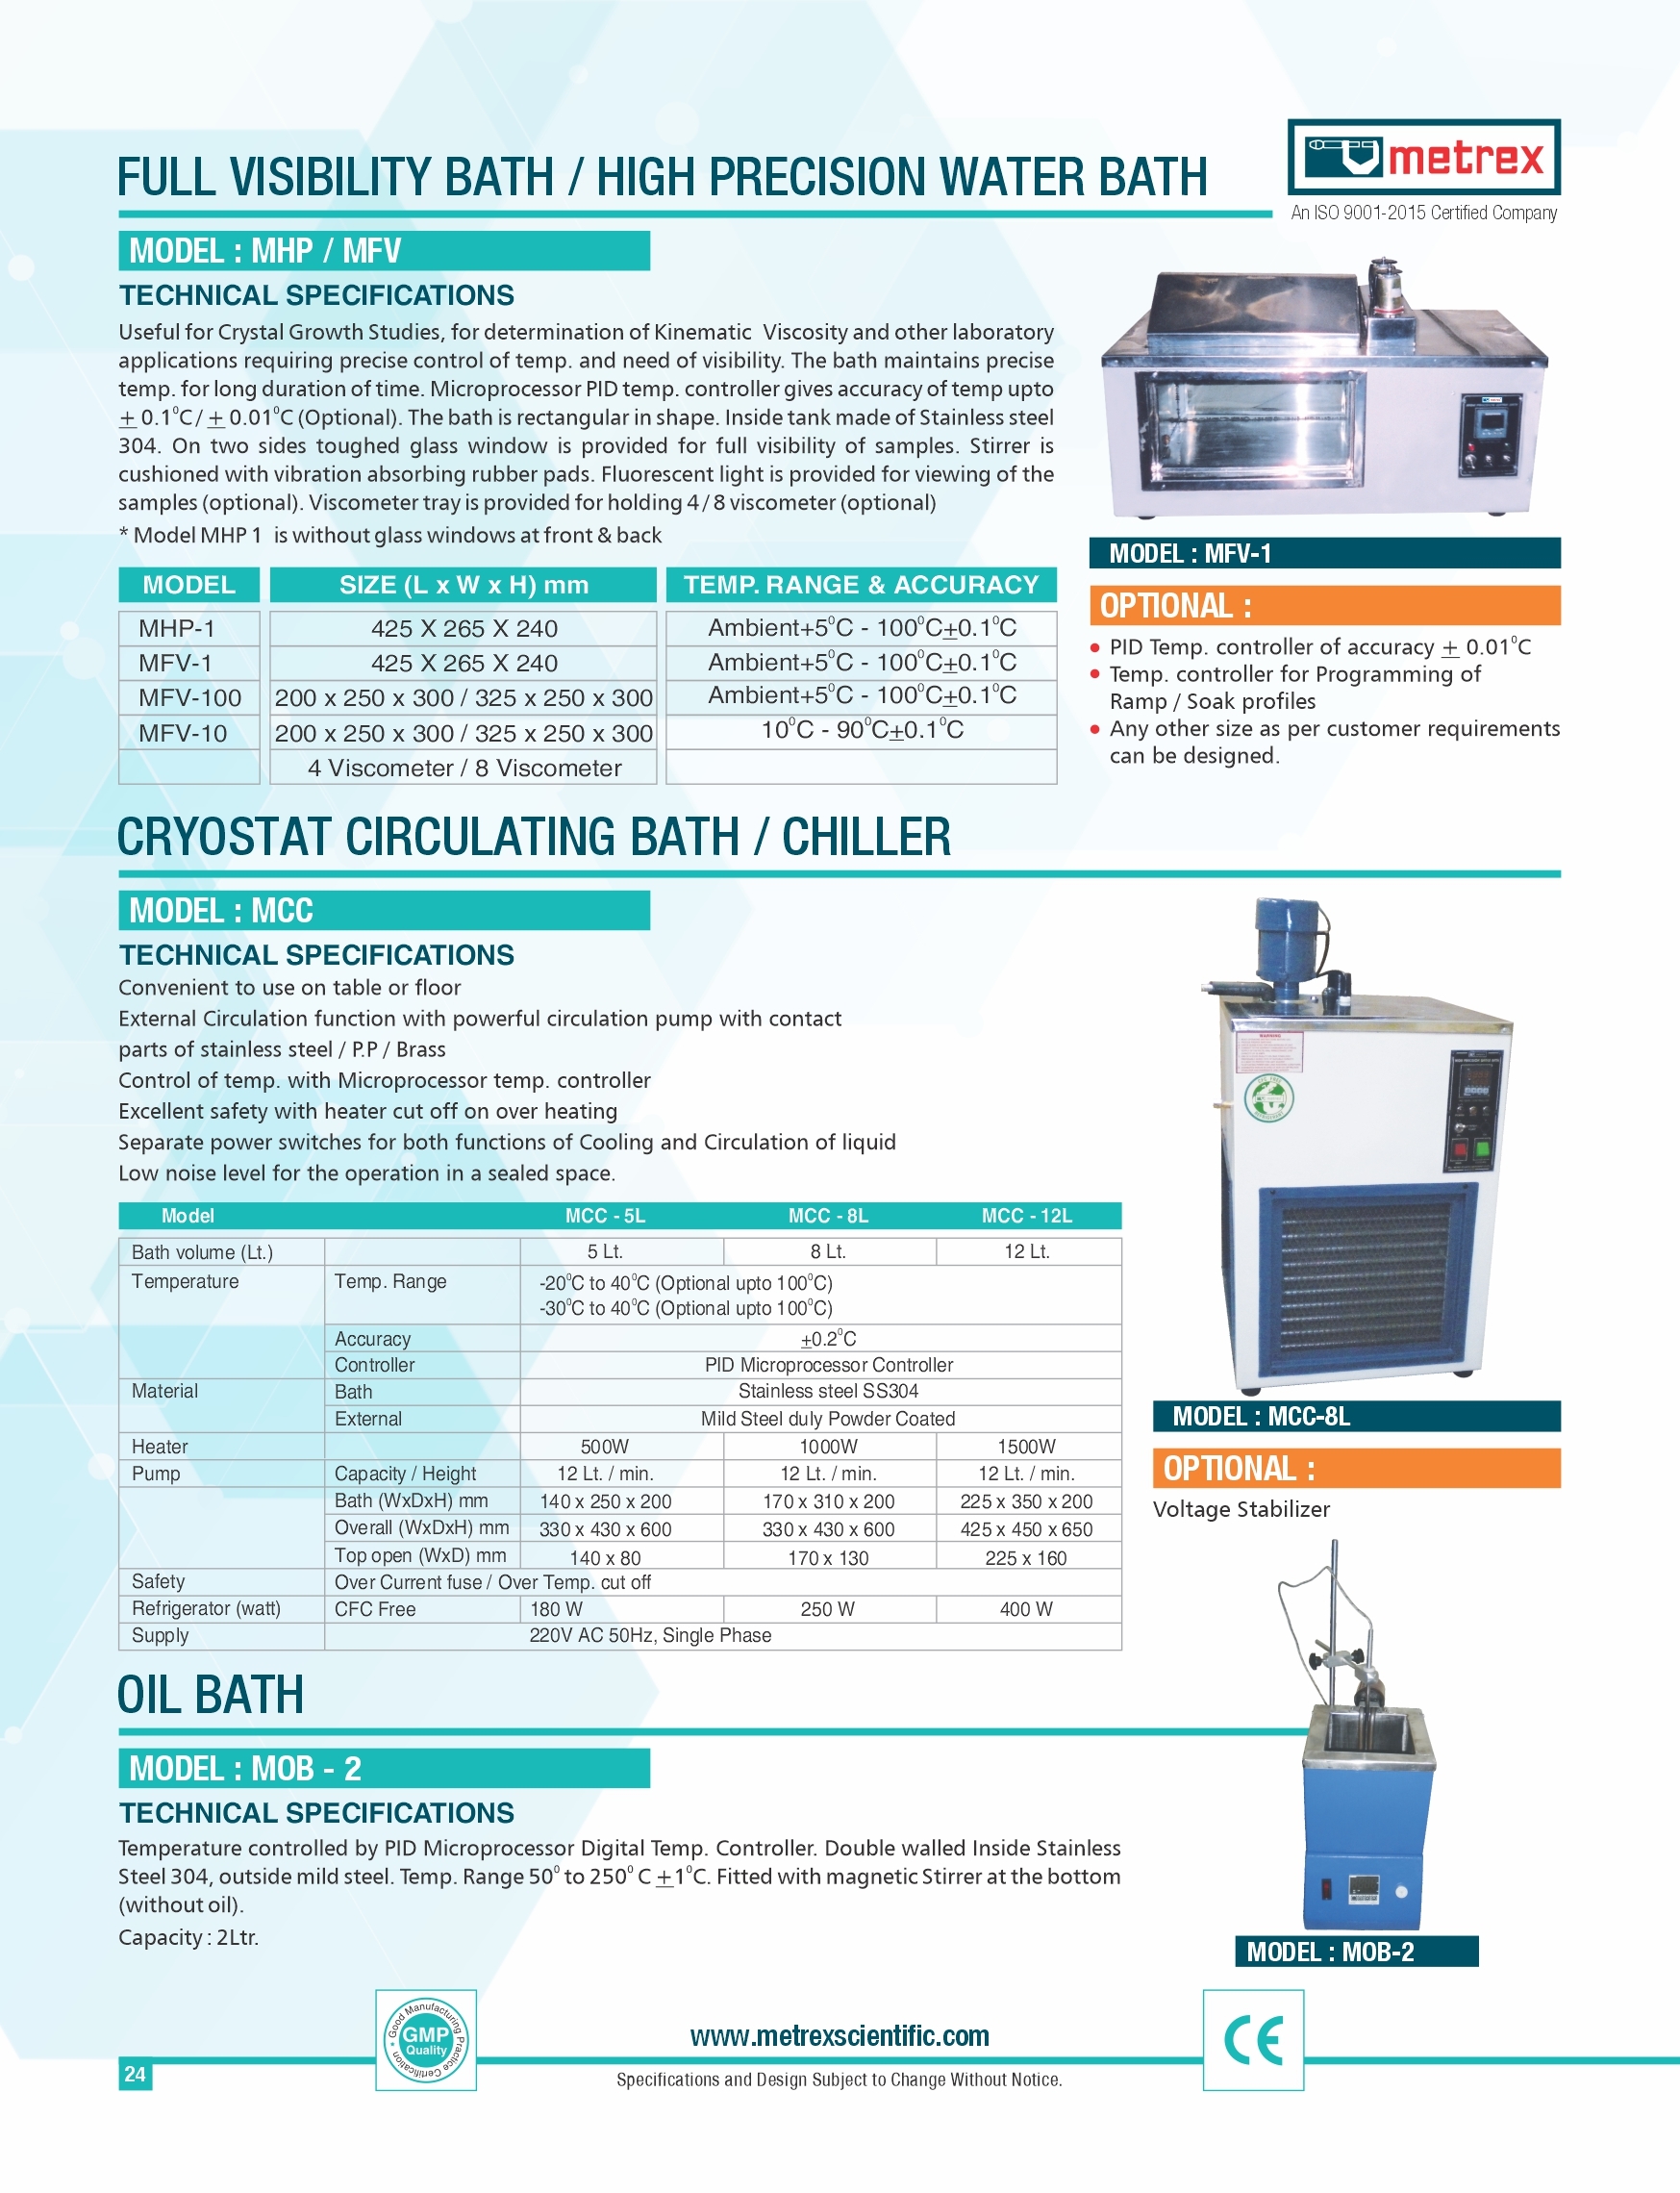 Cryostat Circulating Bath / Chiller